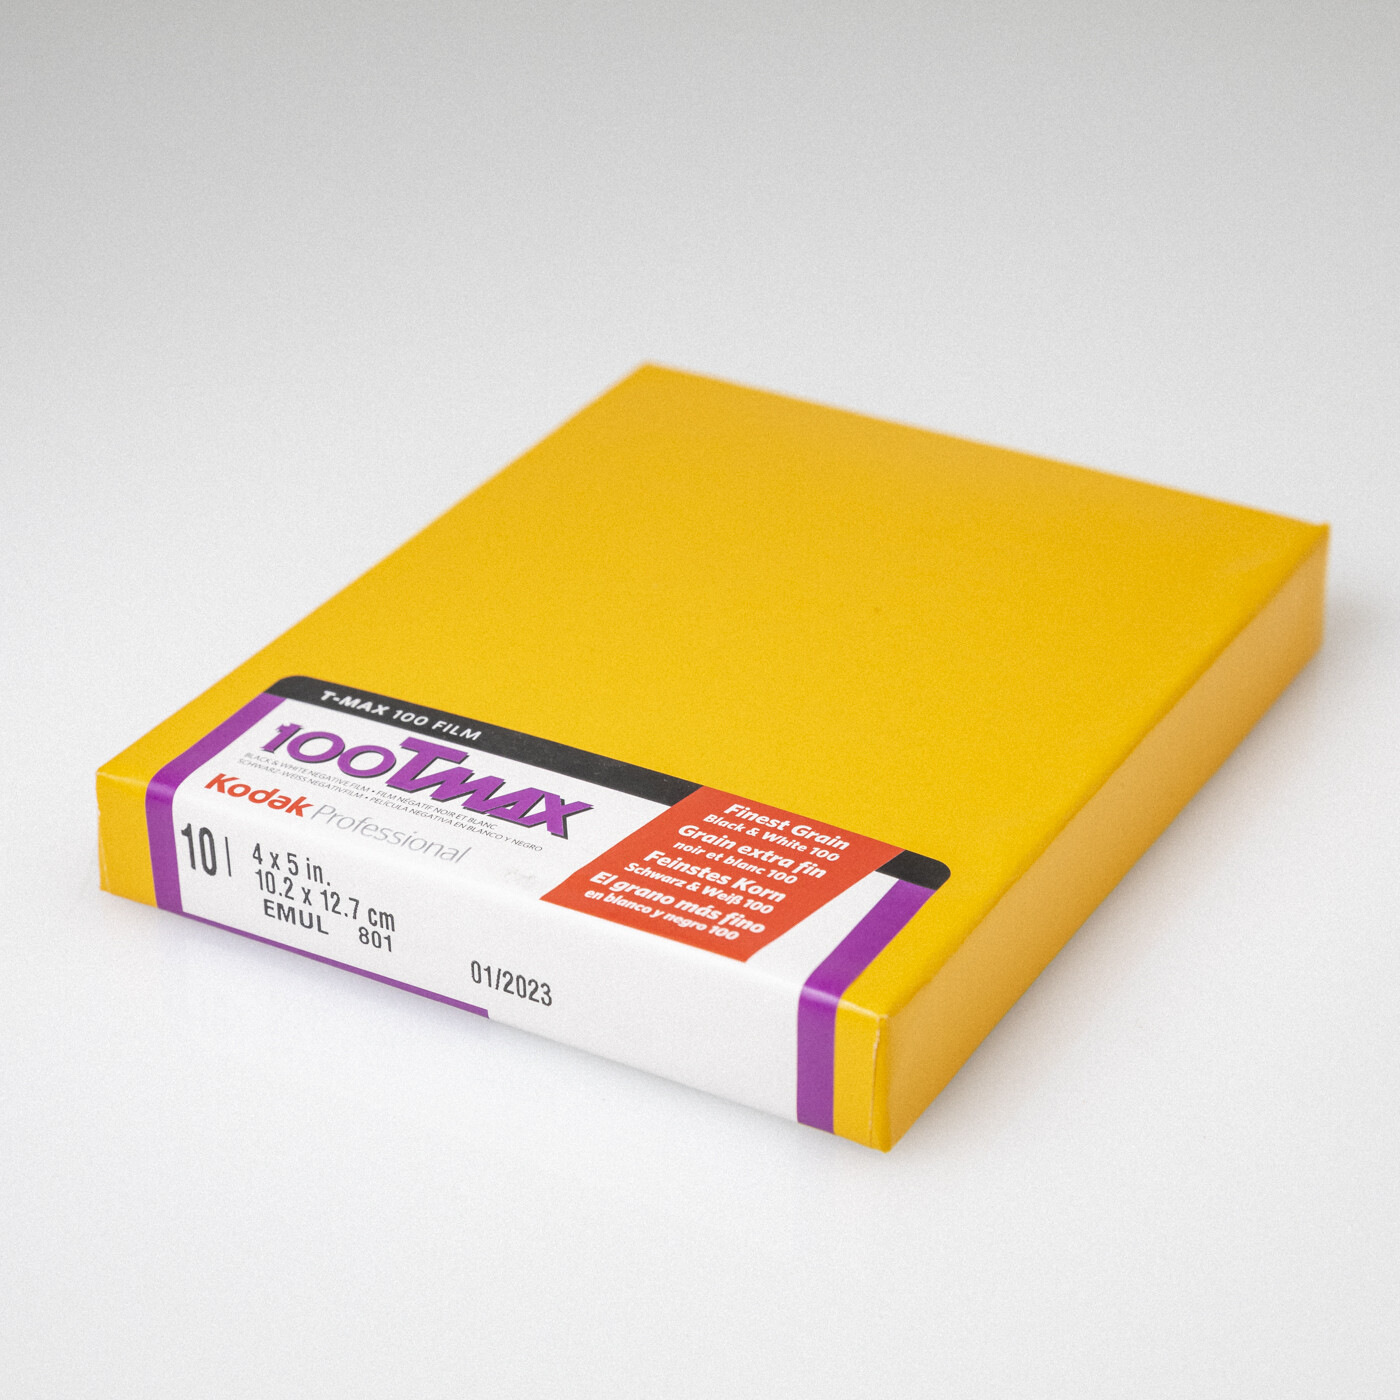 Expired 1/23 - Kodak TMAX 100 4x5 [10 sheets]